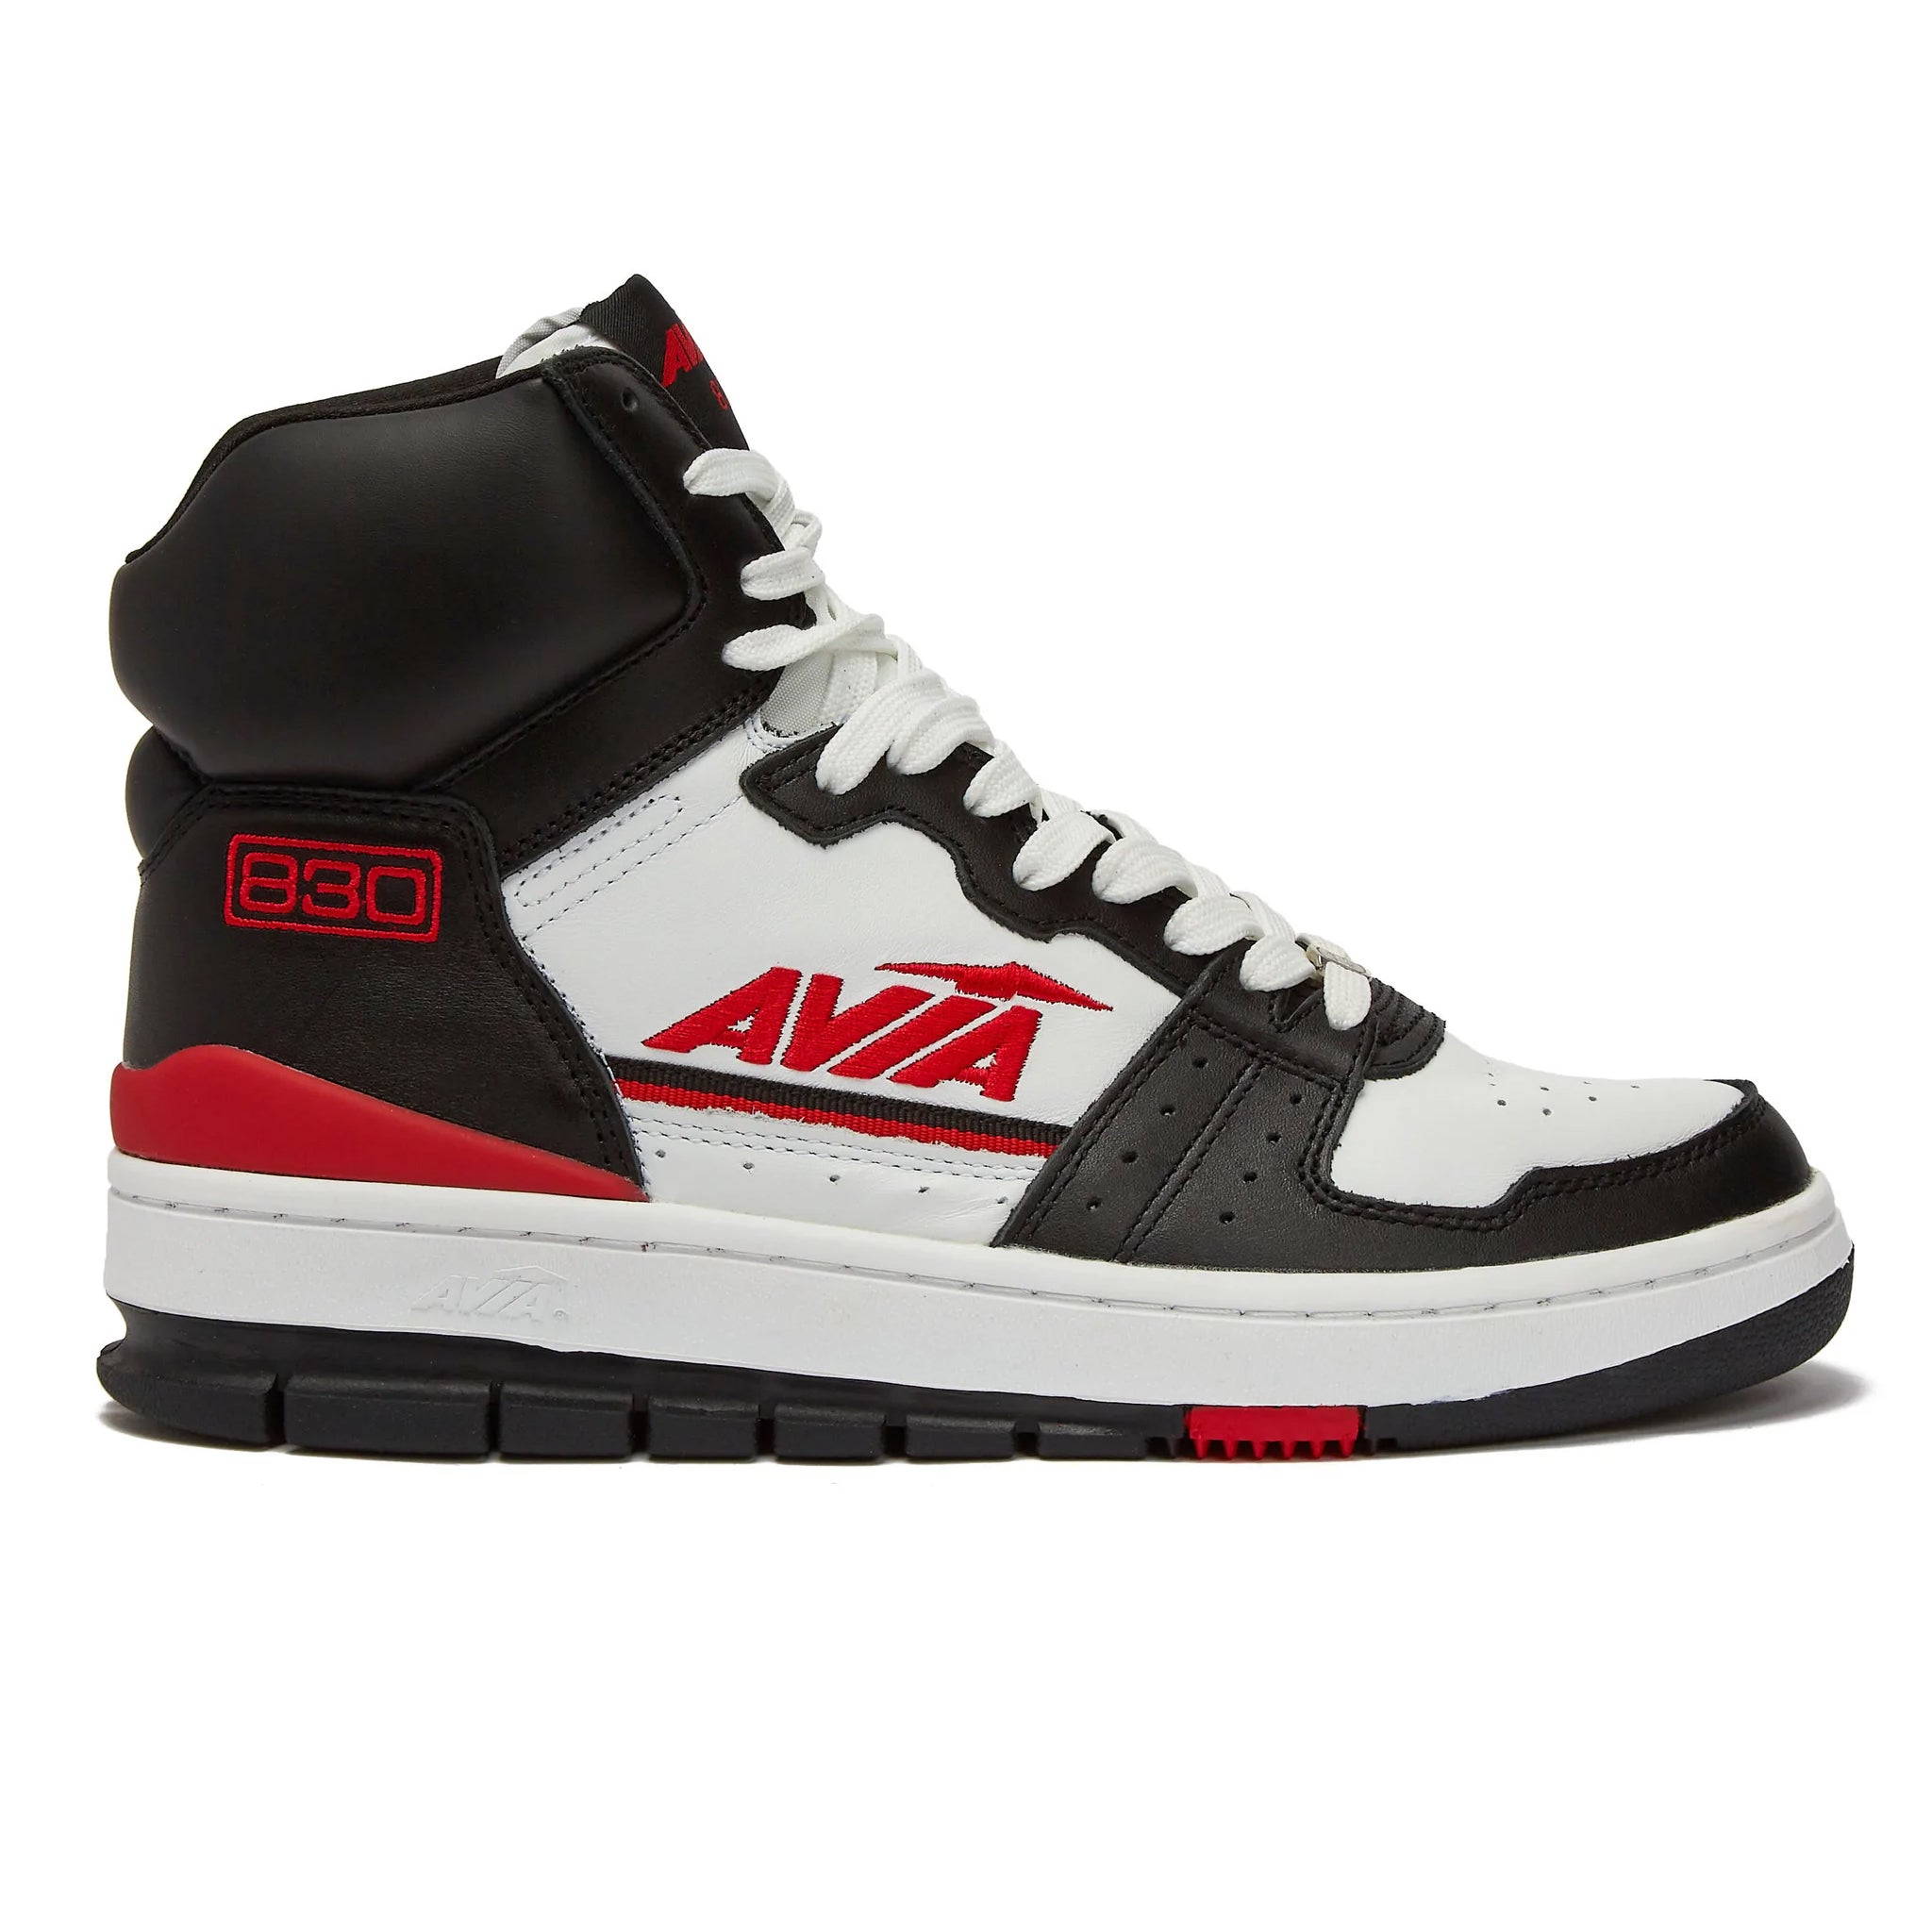 Avia Men's Avi Retro 830 Black Red White Classic Basketball Shoe ...